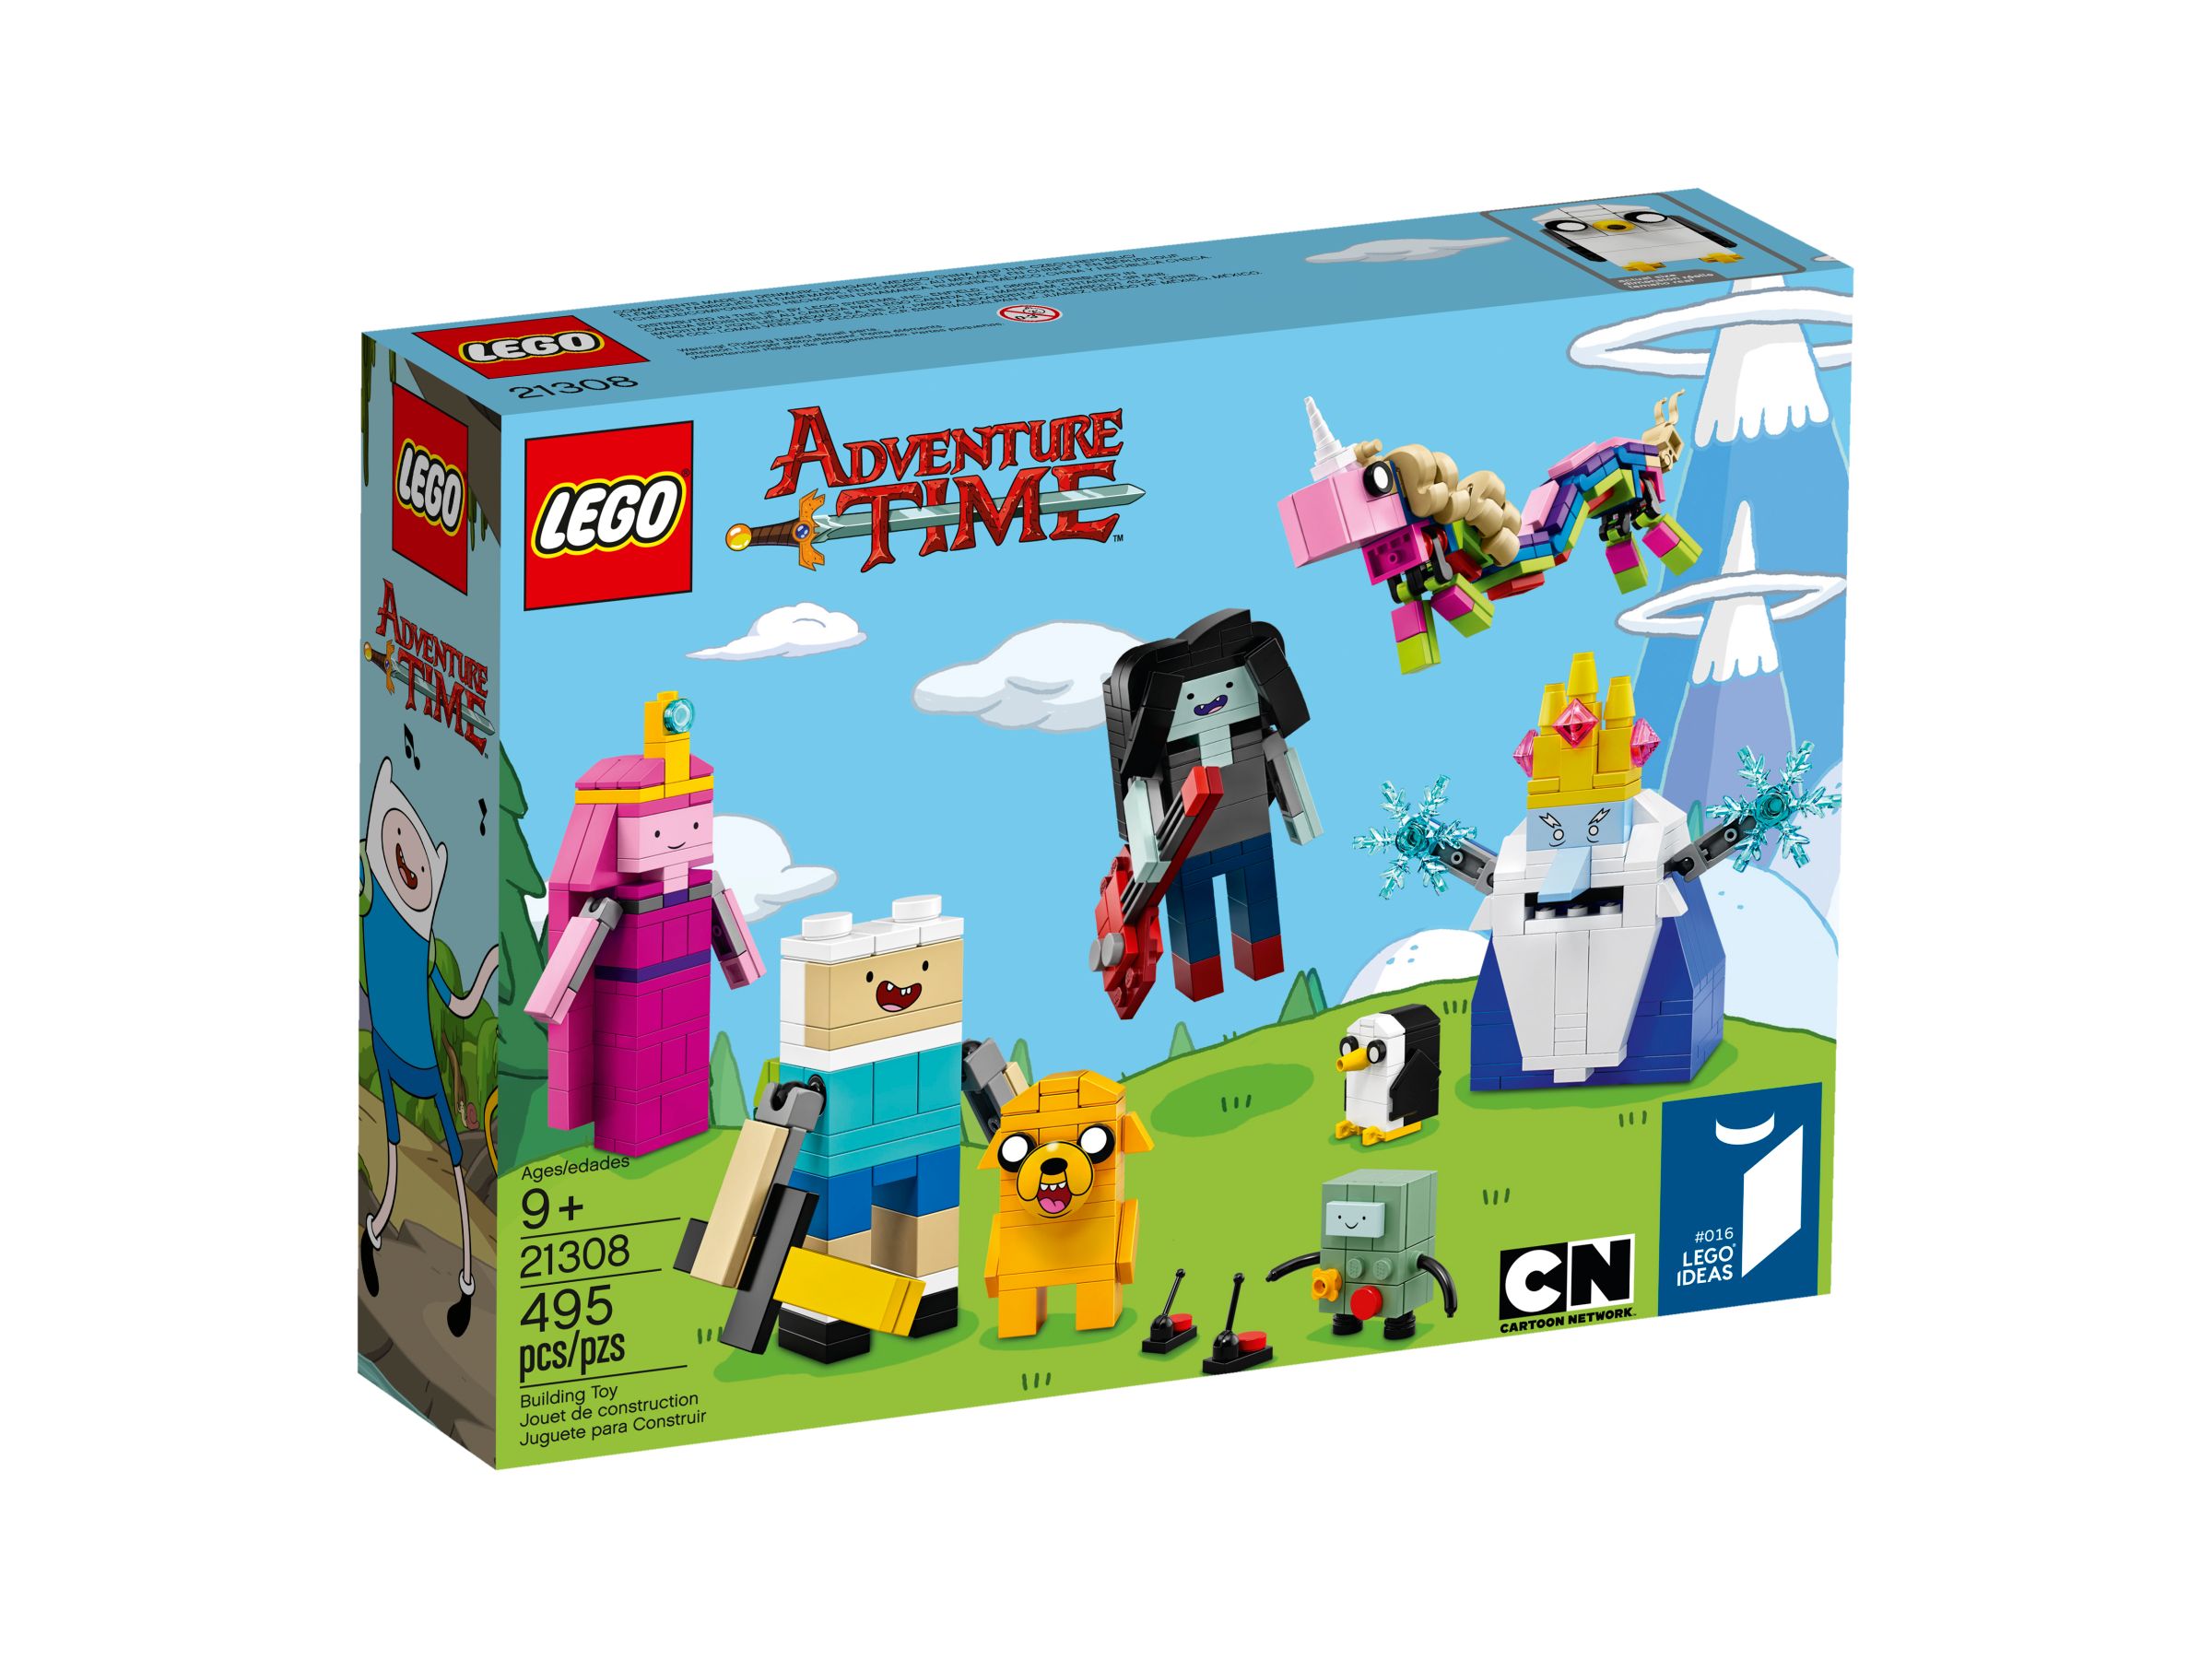 LEGO Ideas 21308 Adventure Time™ LEGO_21308_alt1.jpg